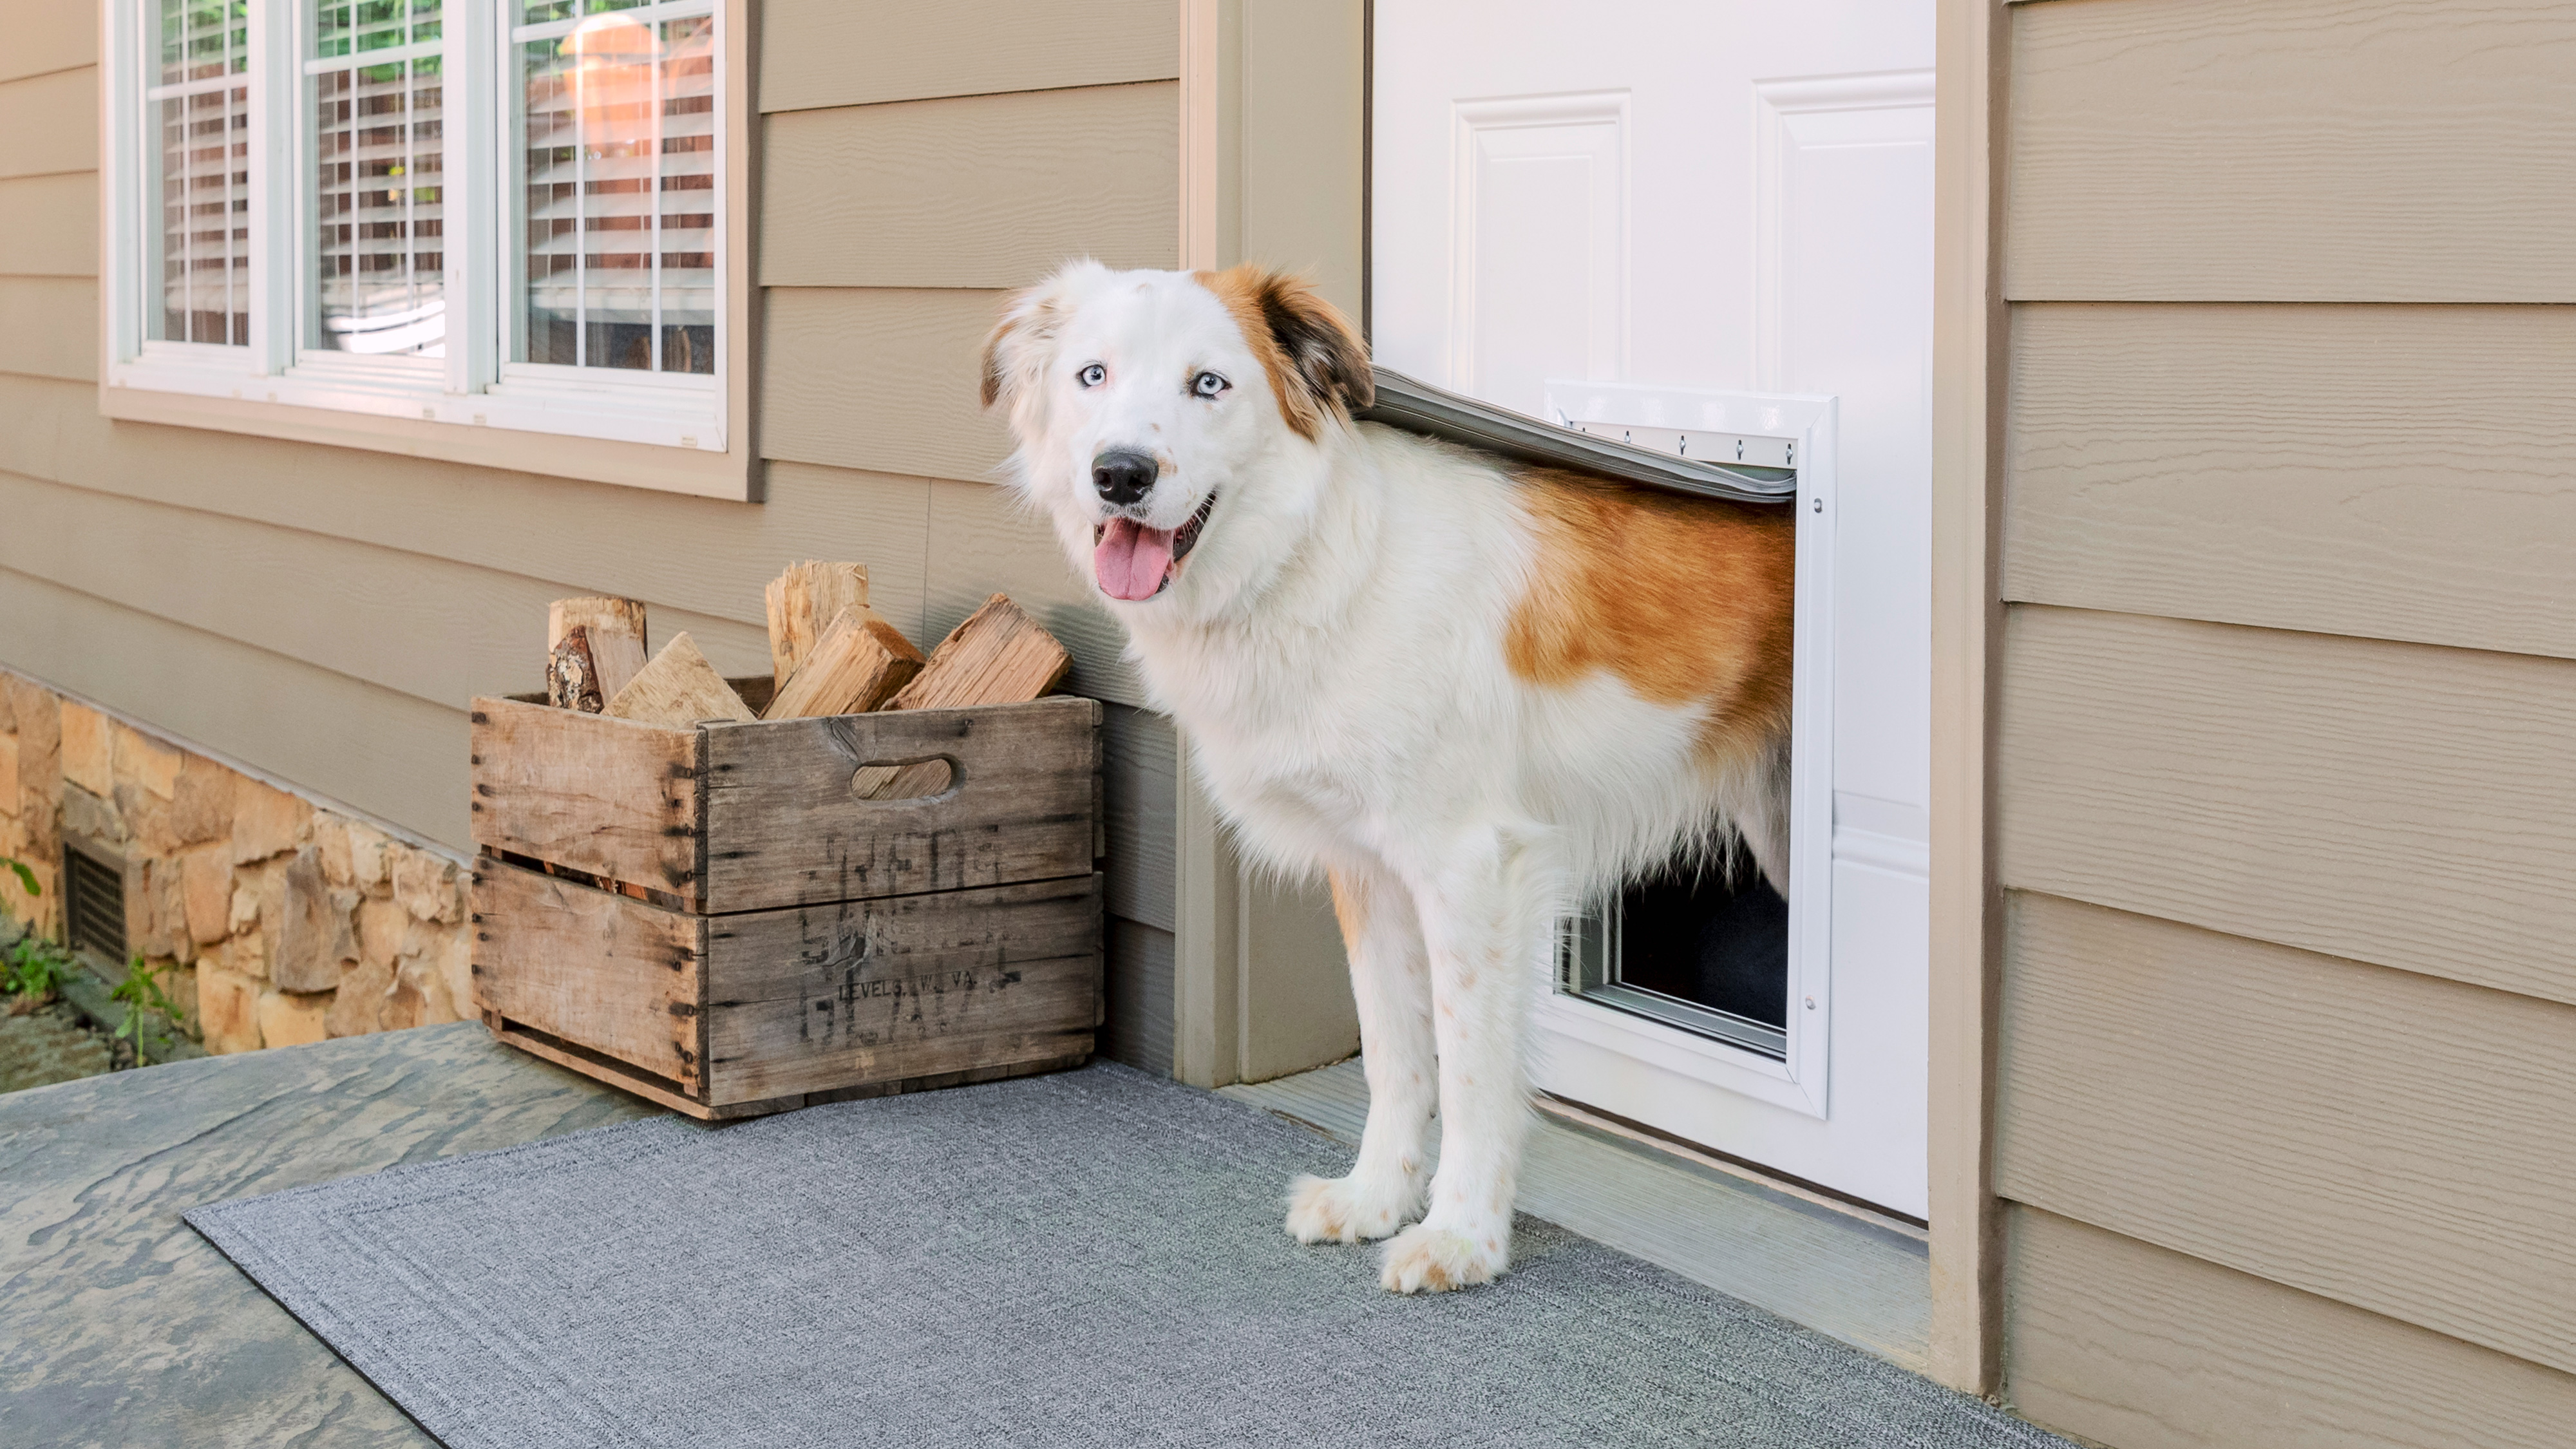 Fall 2021 Animal House, dog doors